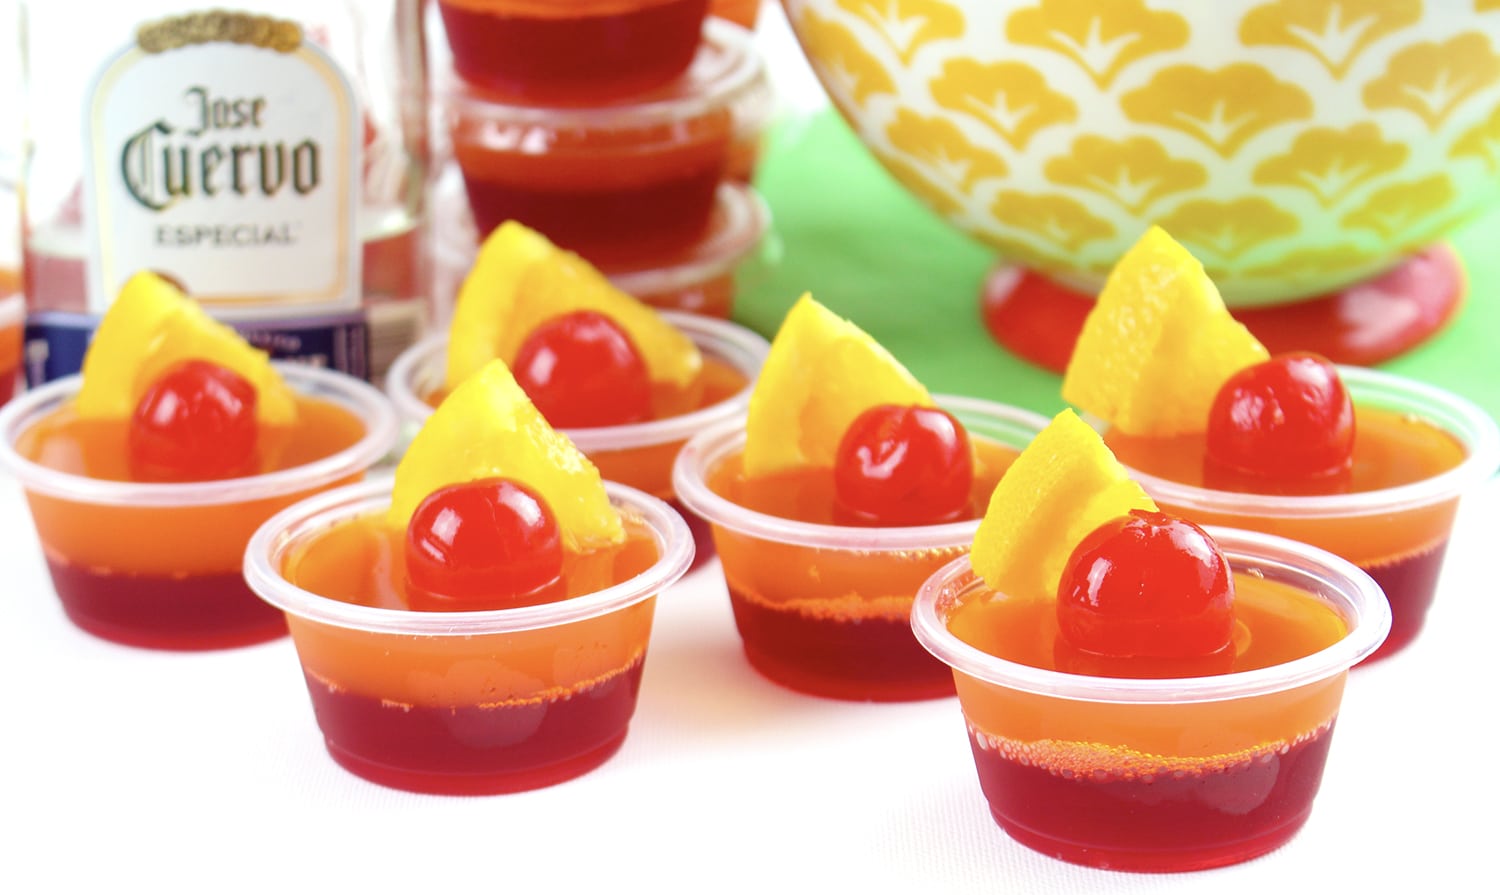 jello shots garnished with maraschino cherries and pineapple slices